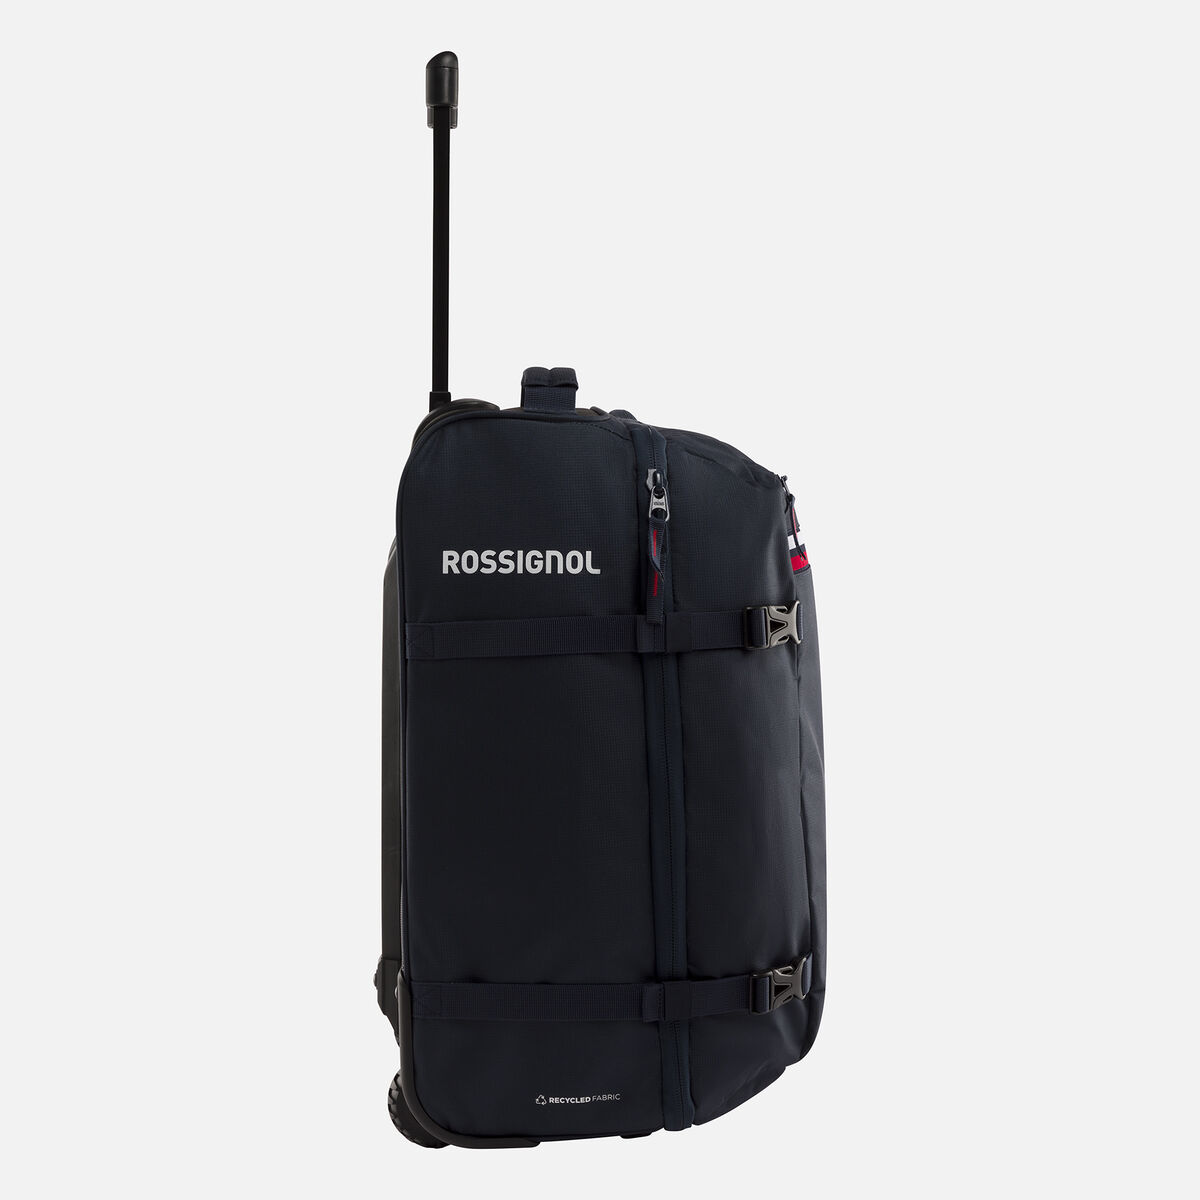 Rapid Dominance R301 Travel Portfolio Bag - Black